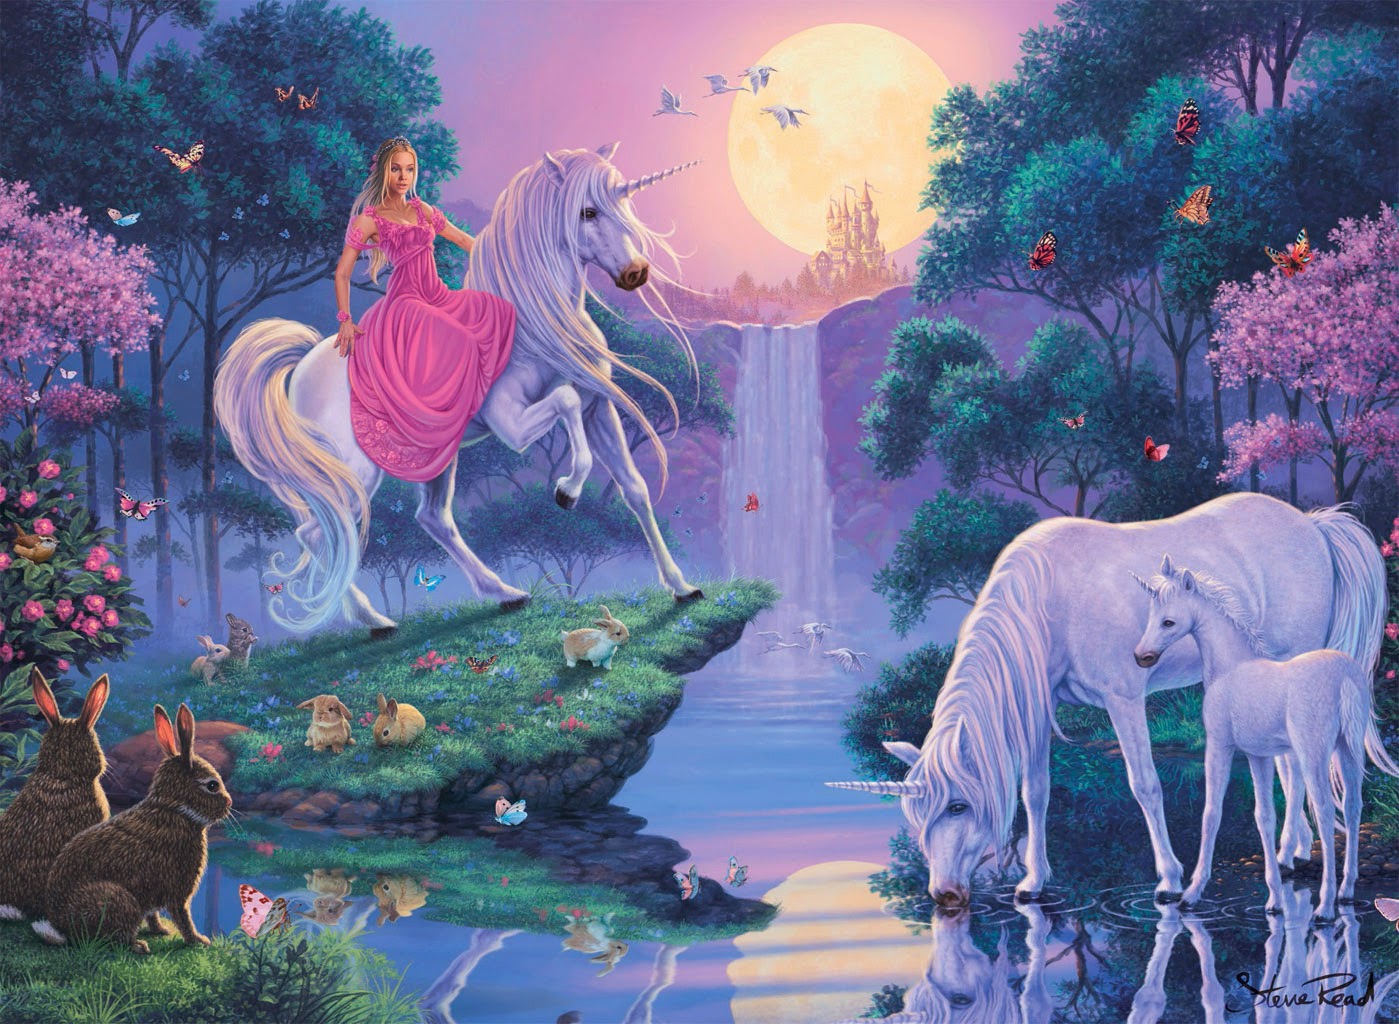 Princess Riding Unicorn Fairy Tale World Kingdom Image For Girls